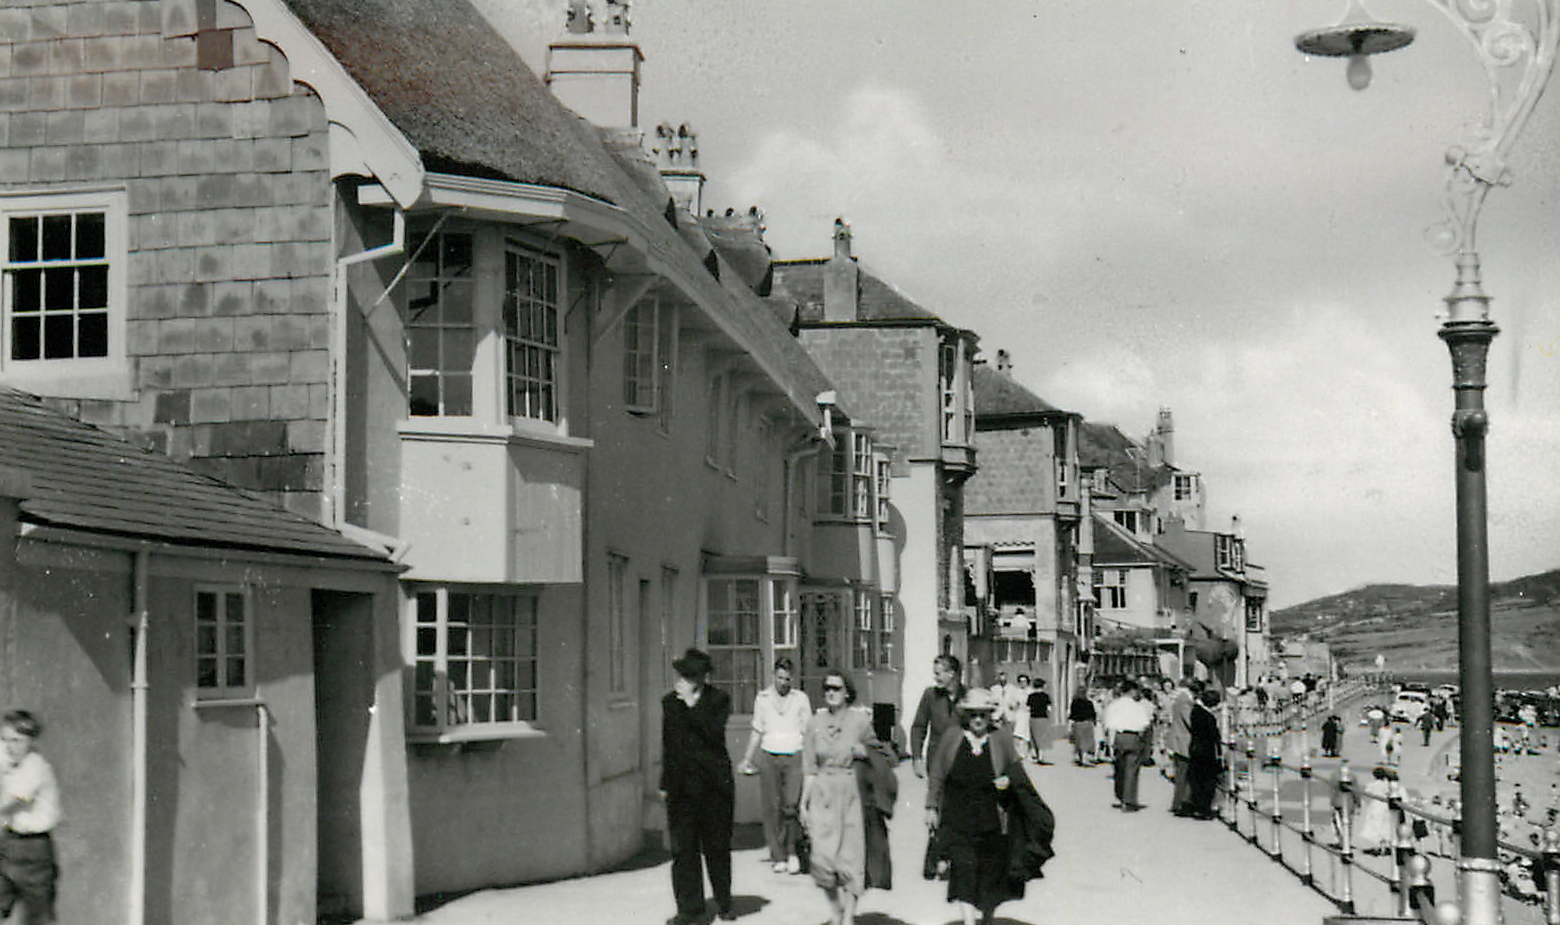 Marine Parade cottages, Lyme Regis circa 1950s